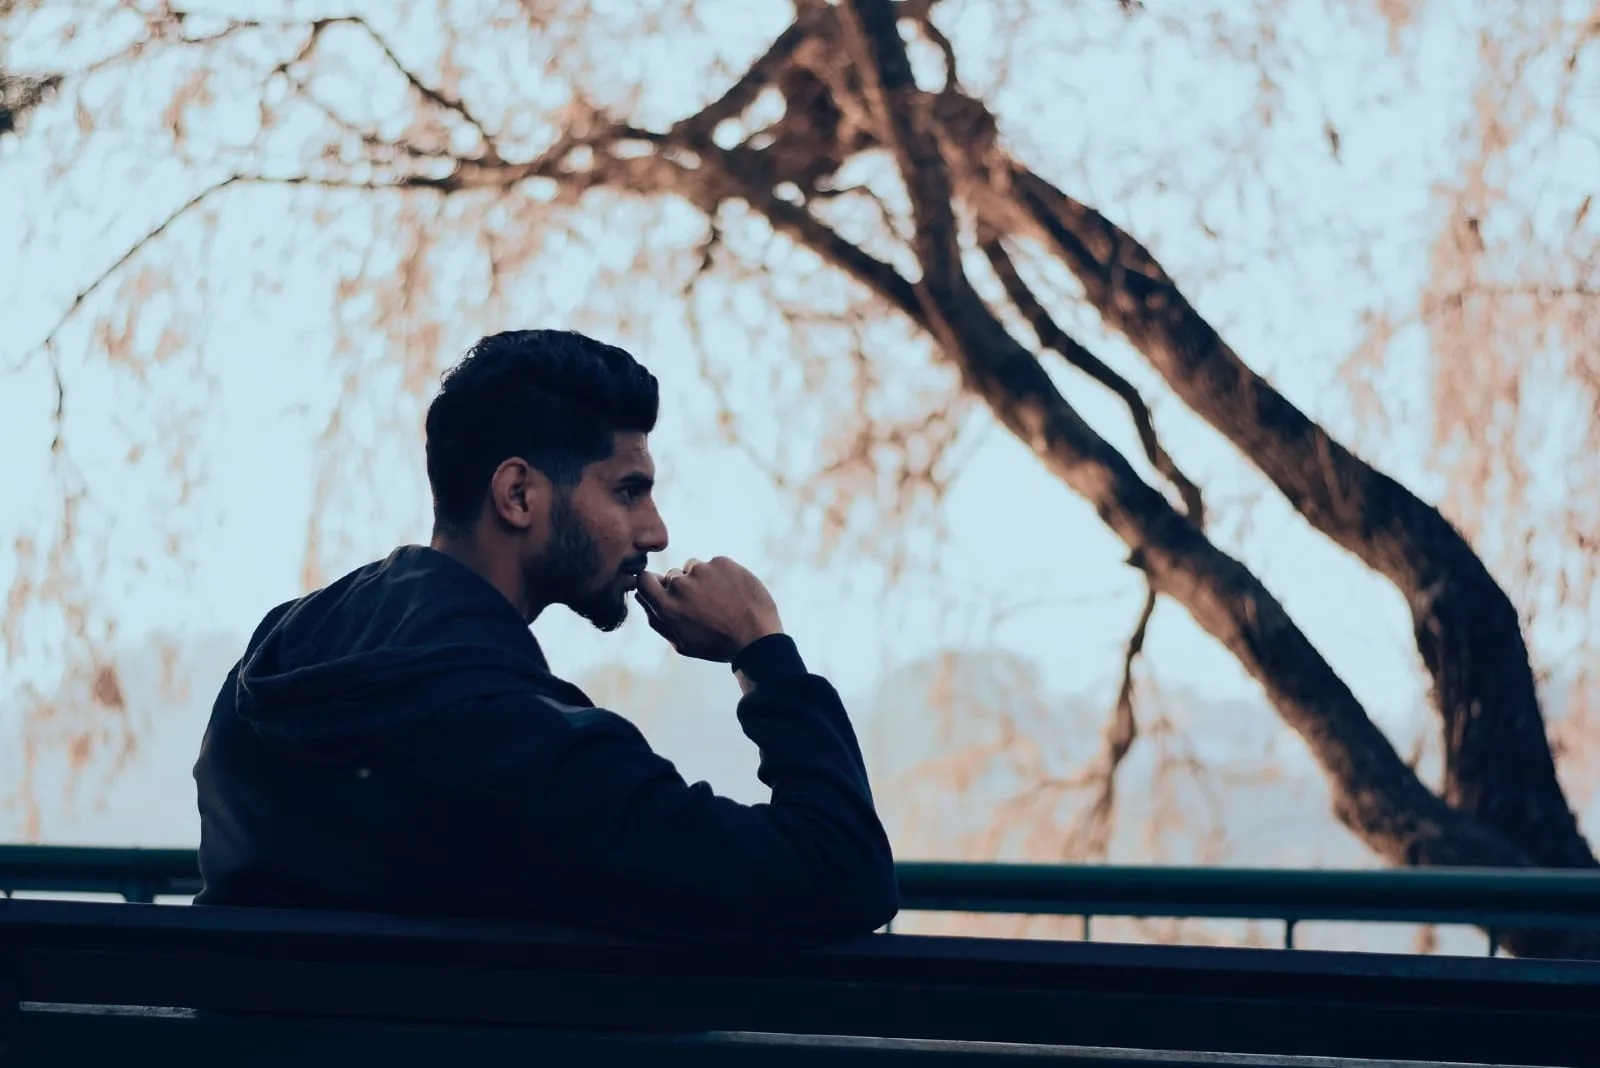 pensive man in black jacket sitting on bench